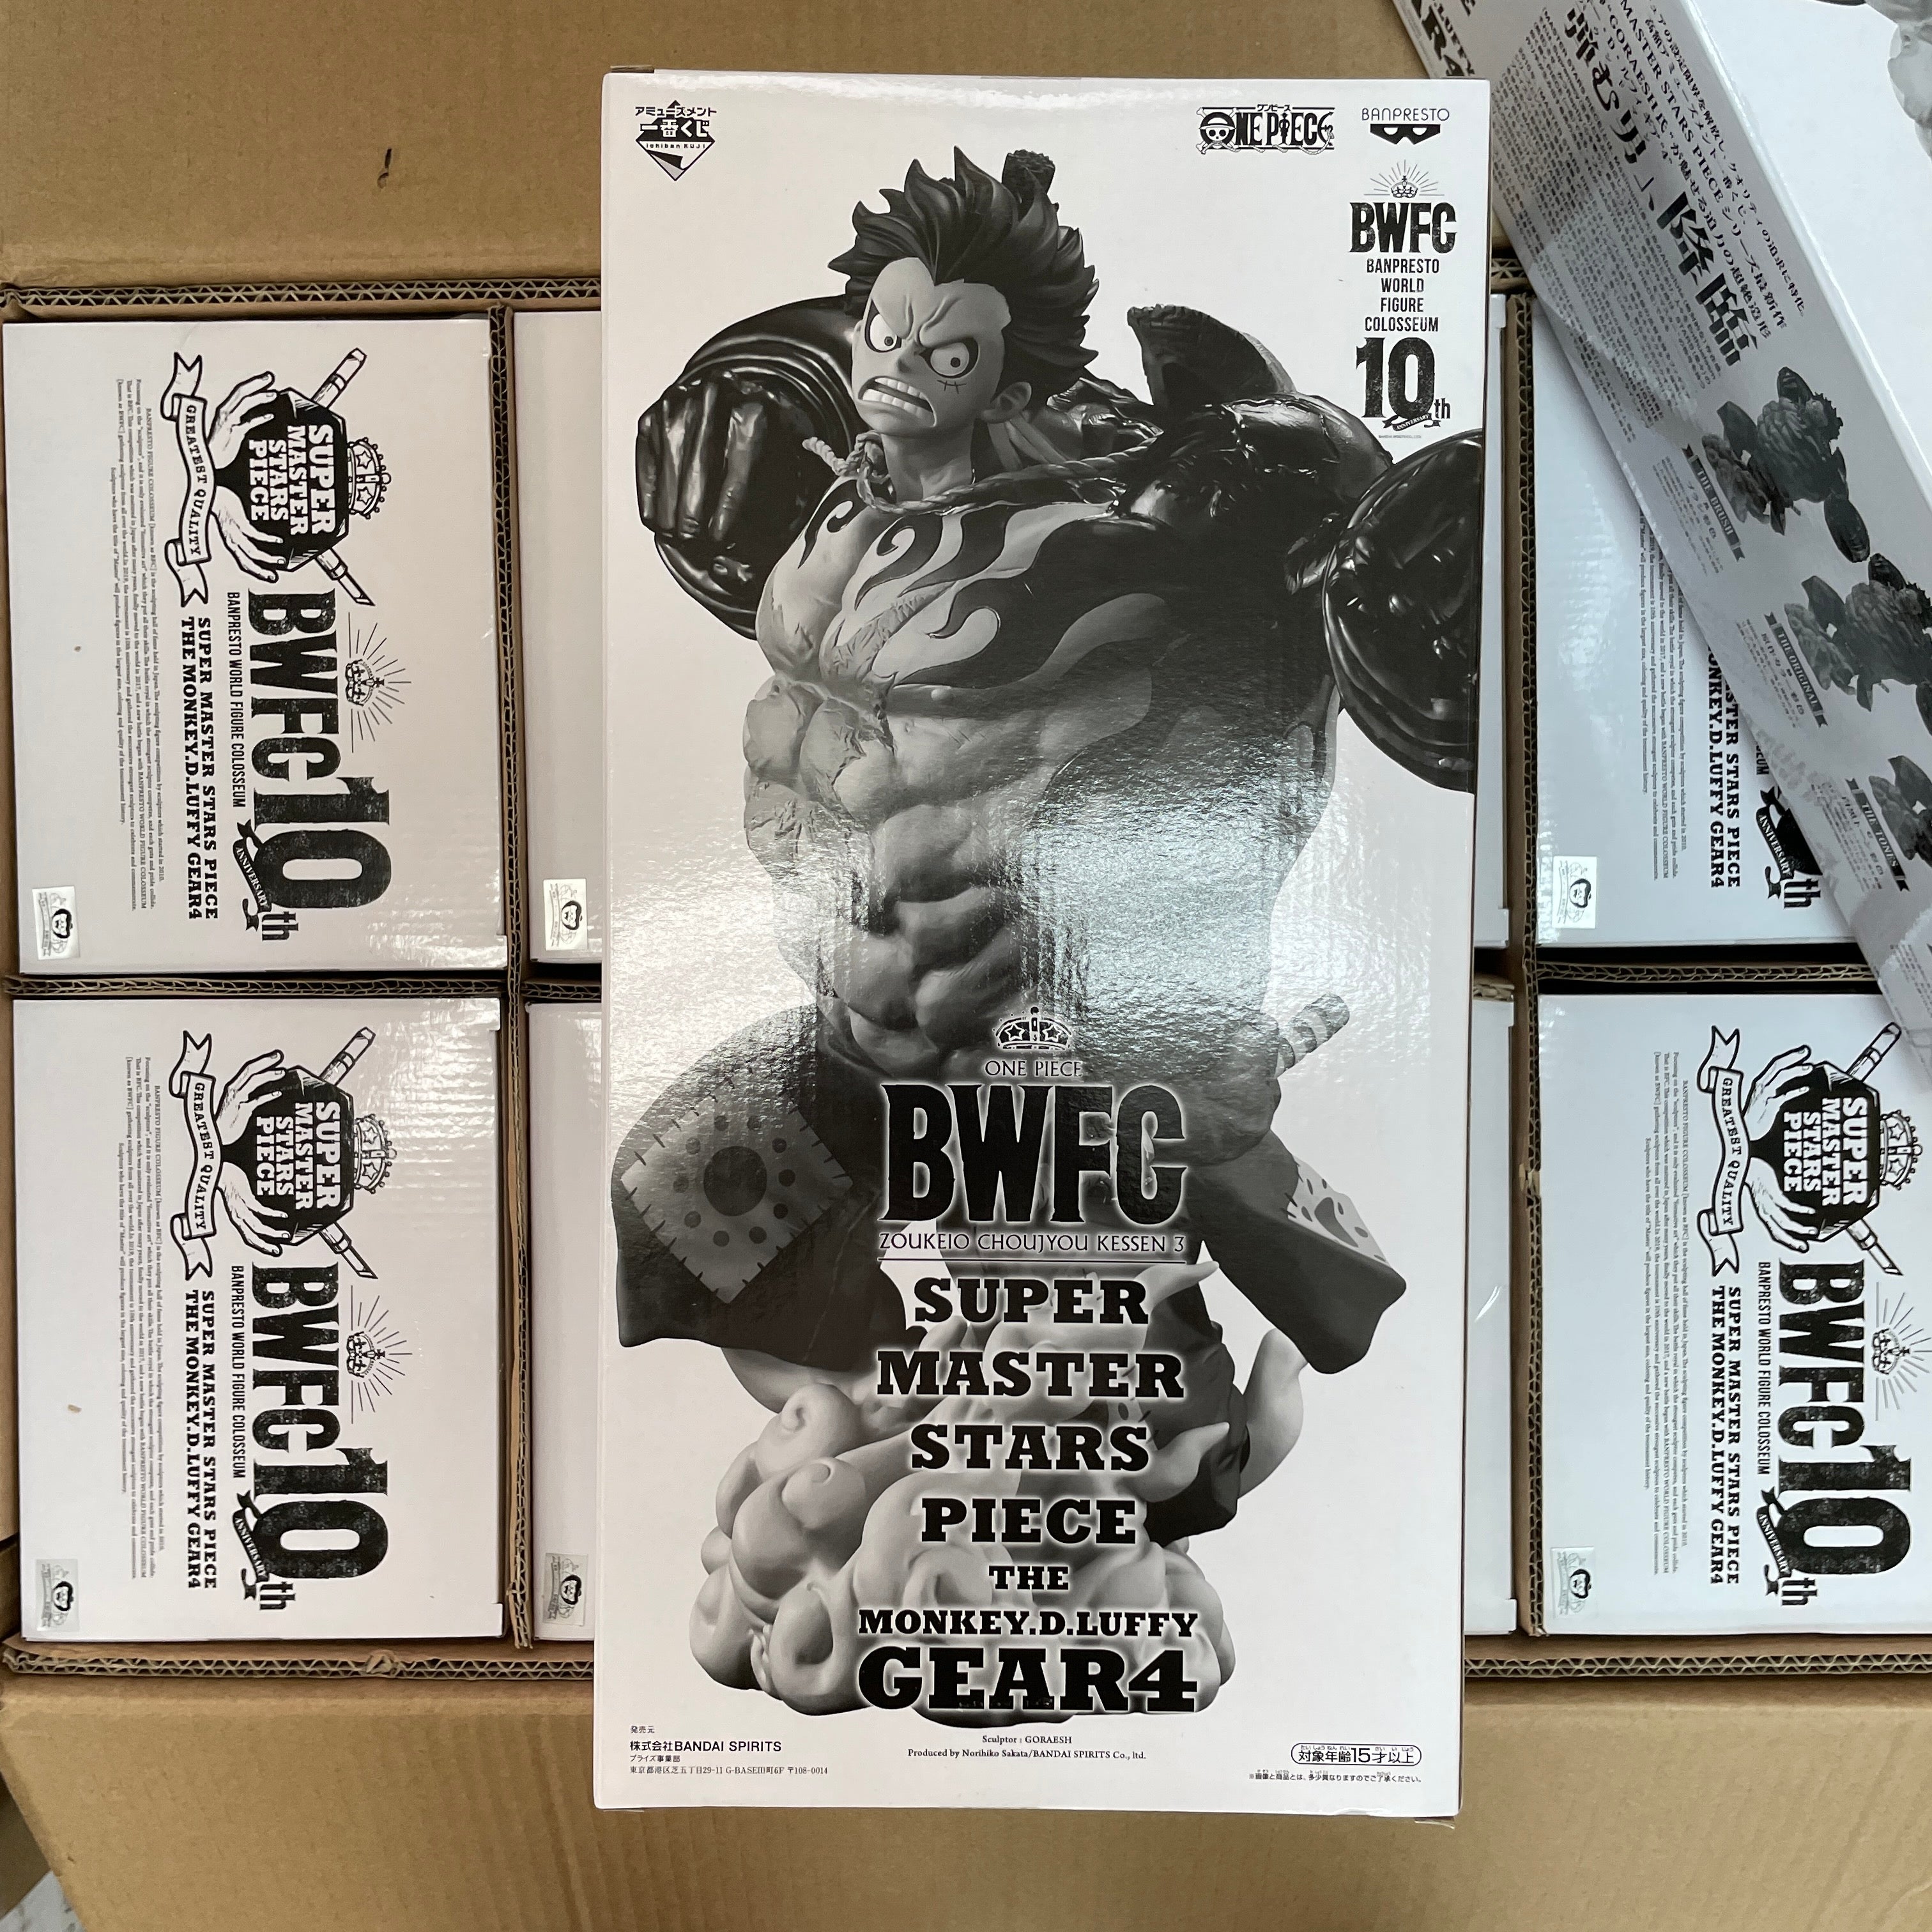 Banpresto Super Master Stars Piece: One Piece - World Figure Colosseum